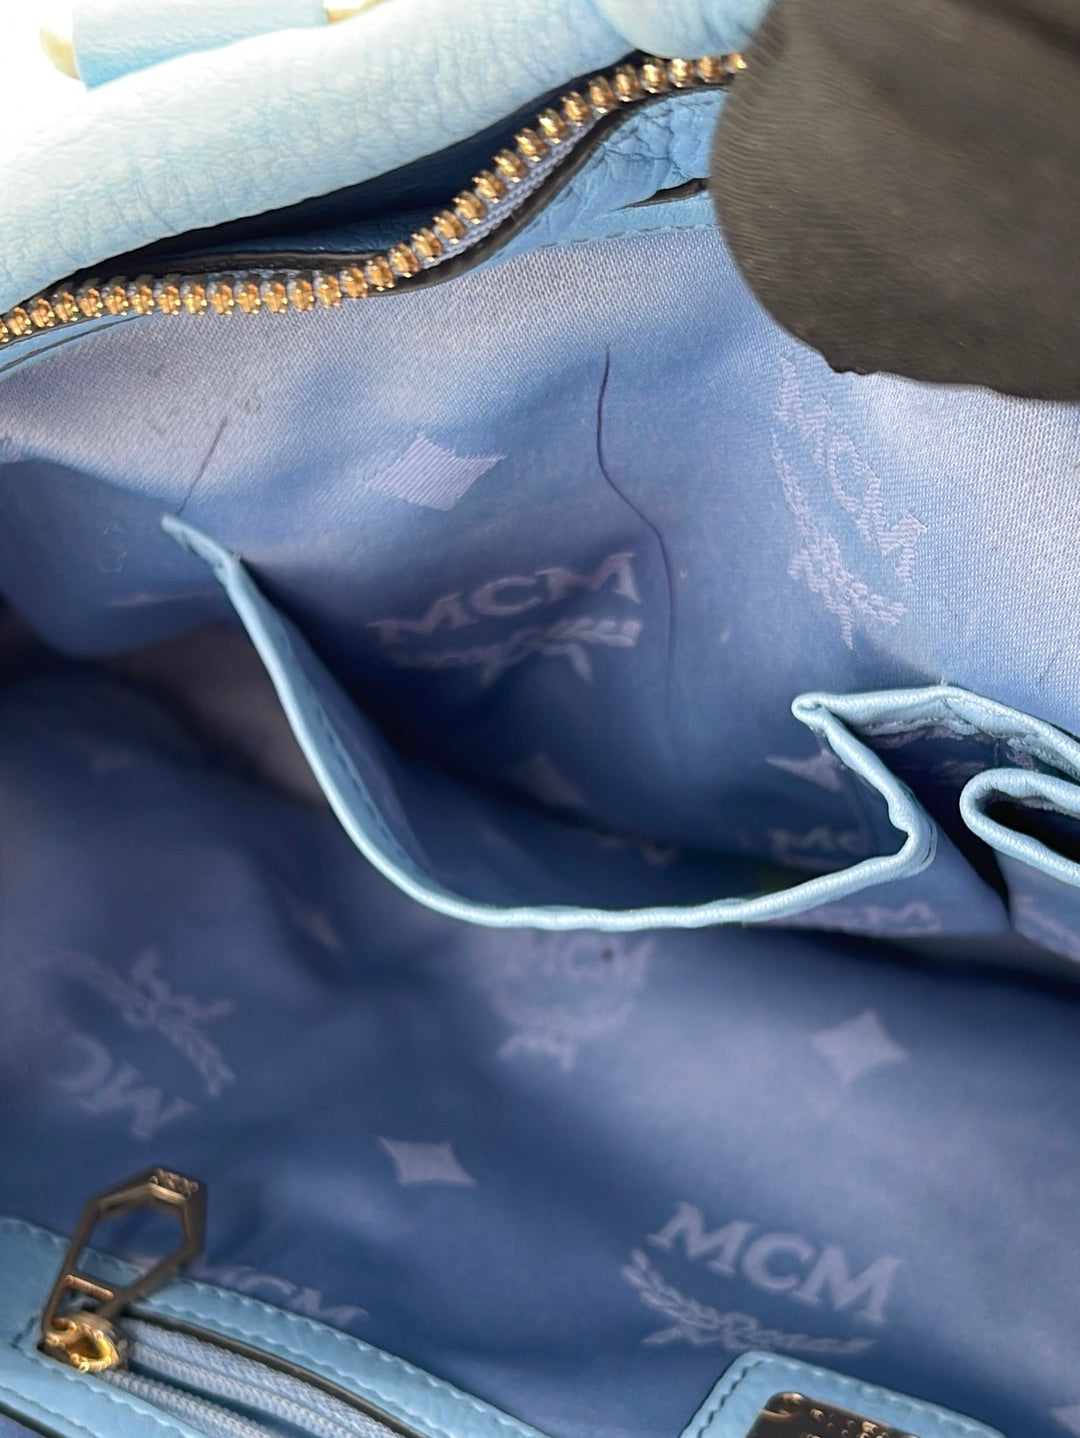 PRELOVED MCM Blue Leather Tote Bag G6014 042123 - $100 OFF DEAL –  KimmieBBags LLC